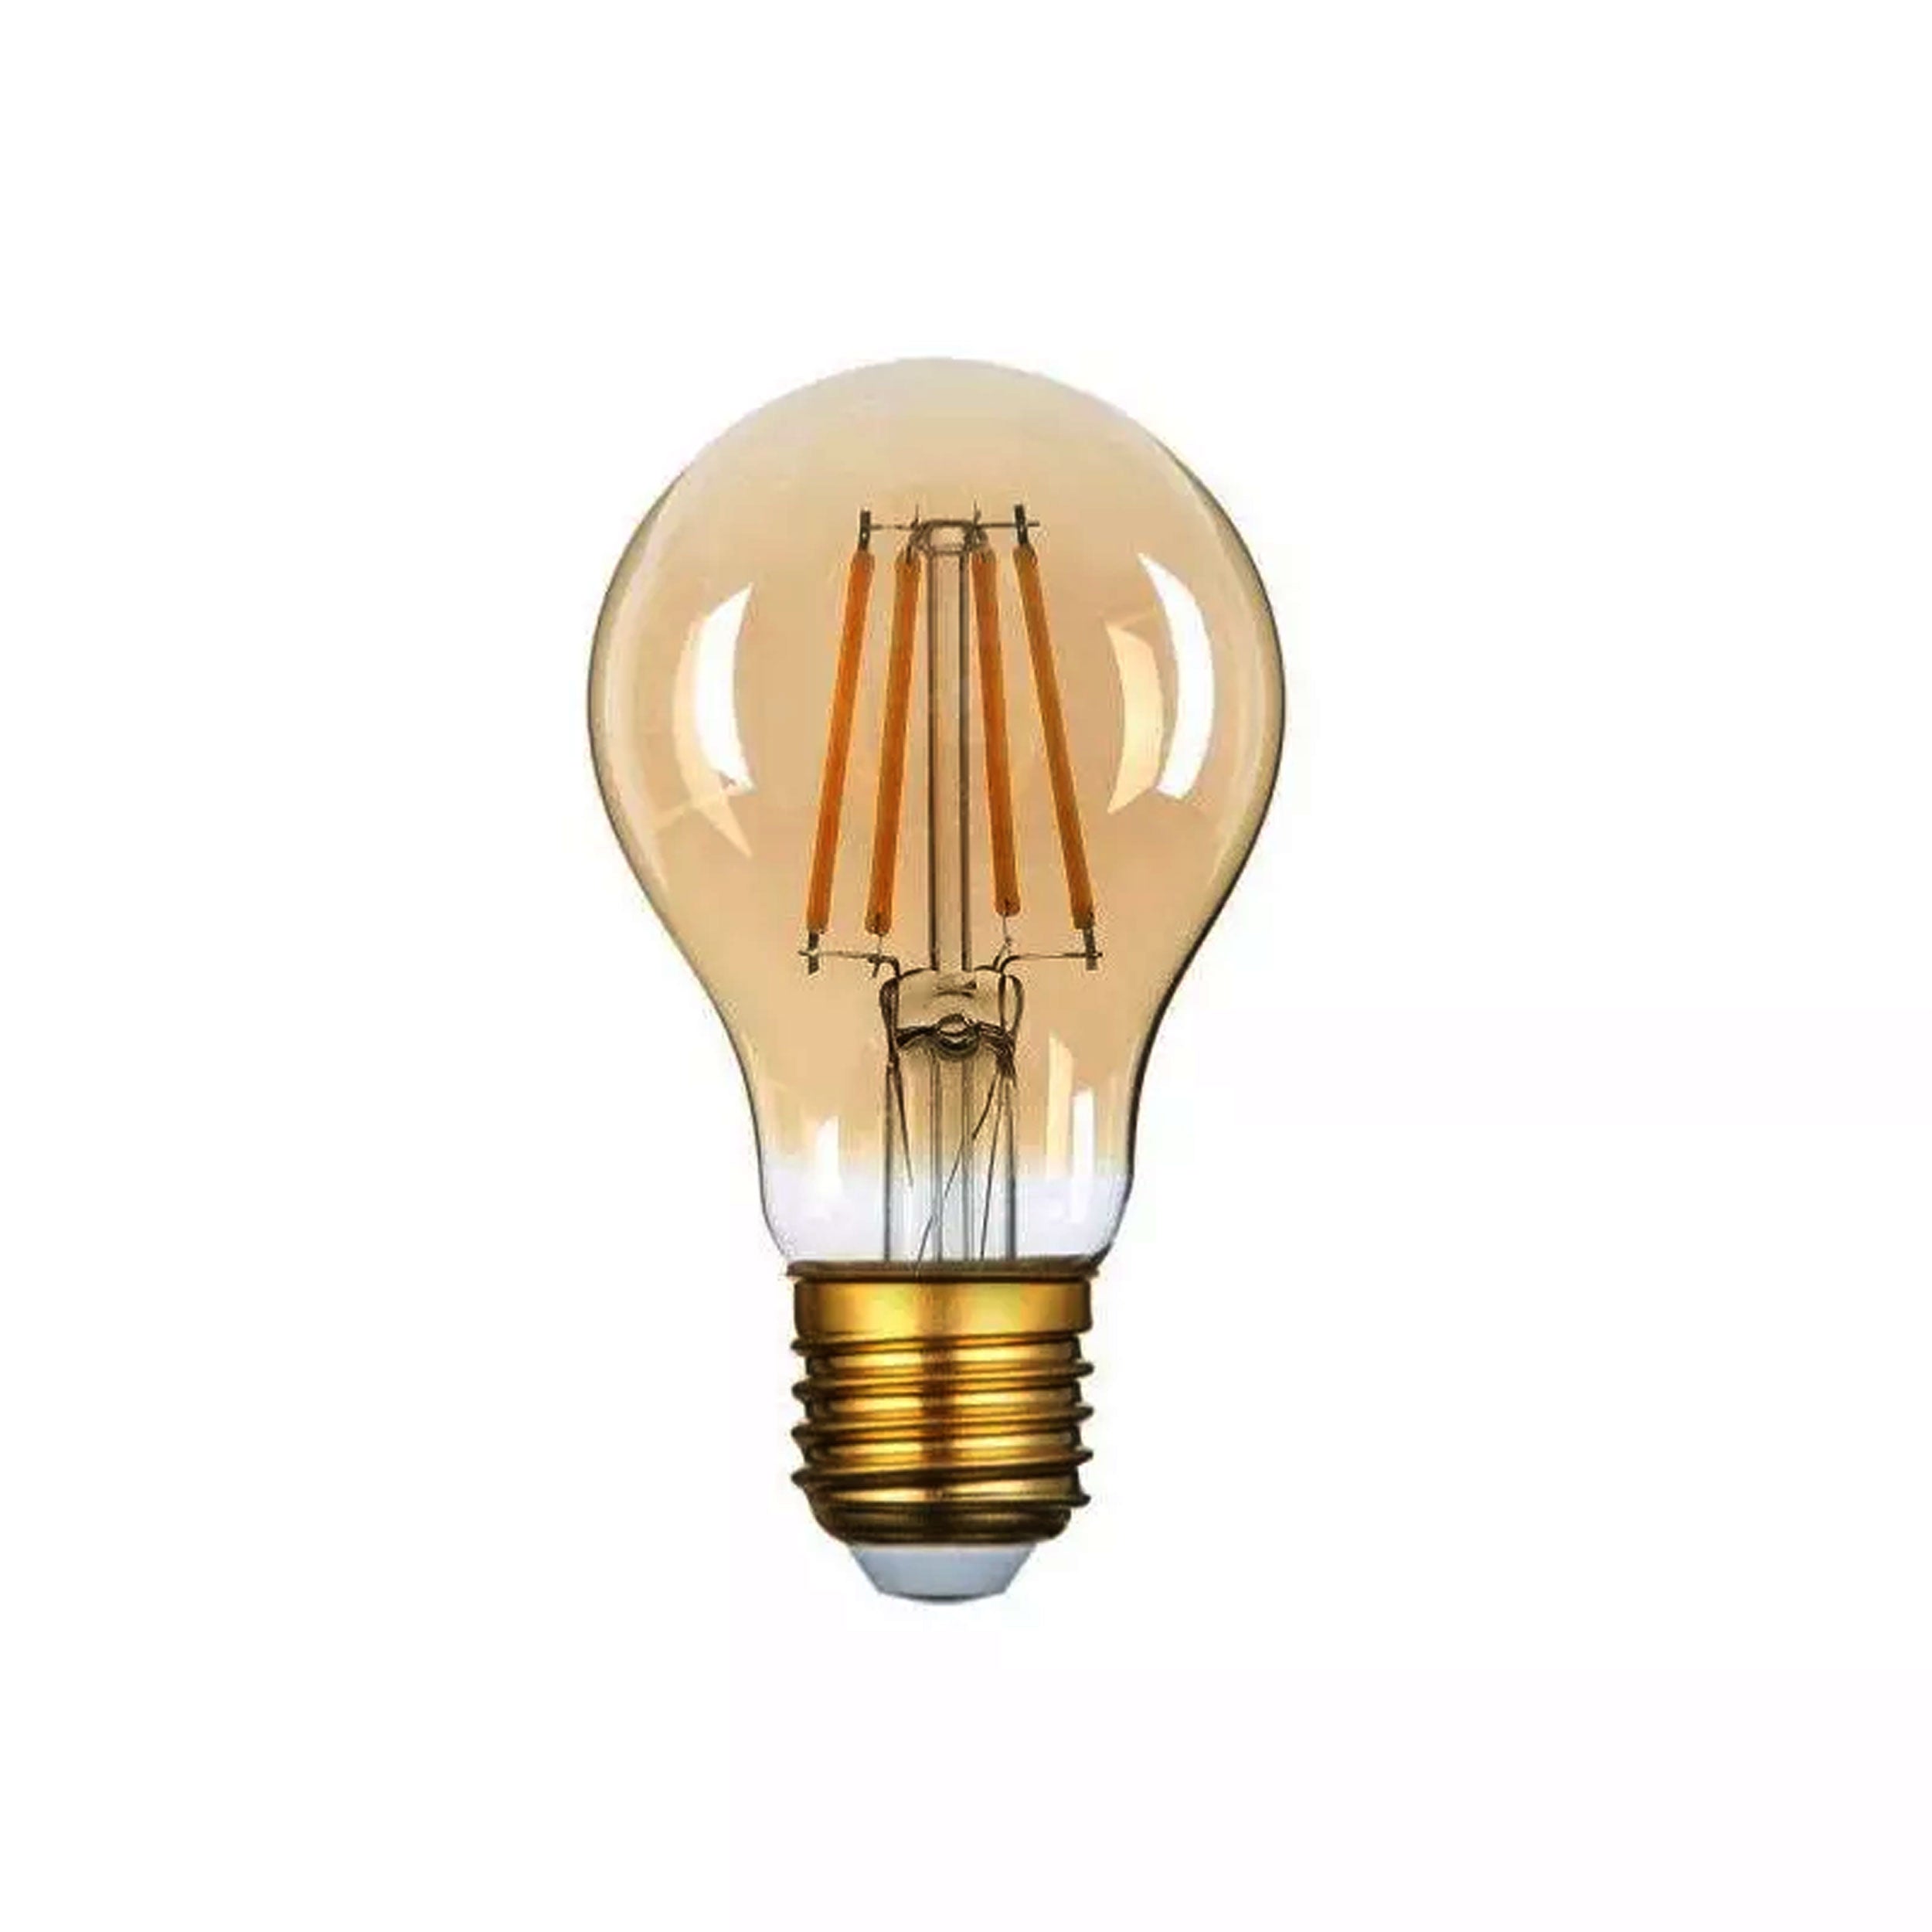 A60 E27 4W Edison Style LED filament light Bulb Retro Vintage Amber light bulb Warm white screw bulbs 2700K Light Bulbs Best for Home Decoration, Pendant Lamps, Chandeliers, Restaurant and Bar Lighting Amber Light